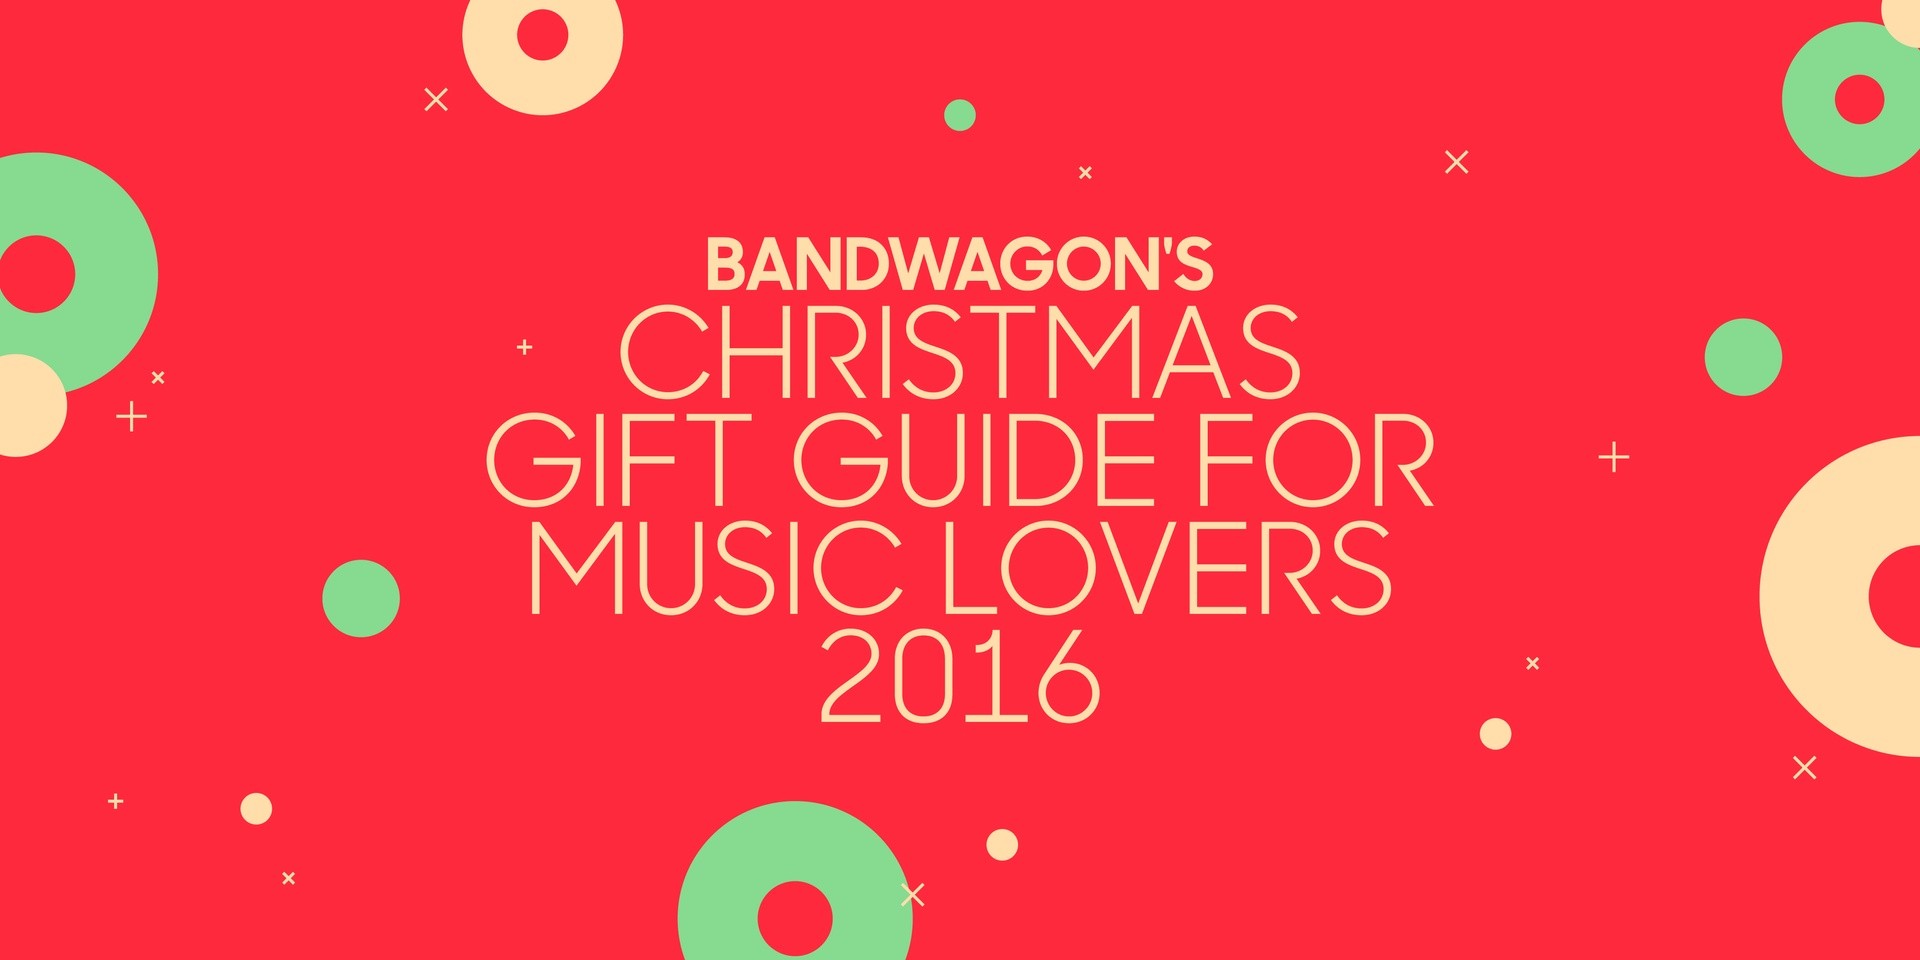 Bandwagon's Christmas Gift Guide For Music Lovers 2016